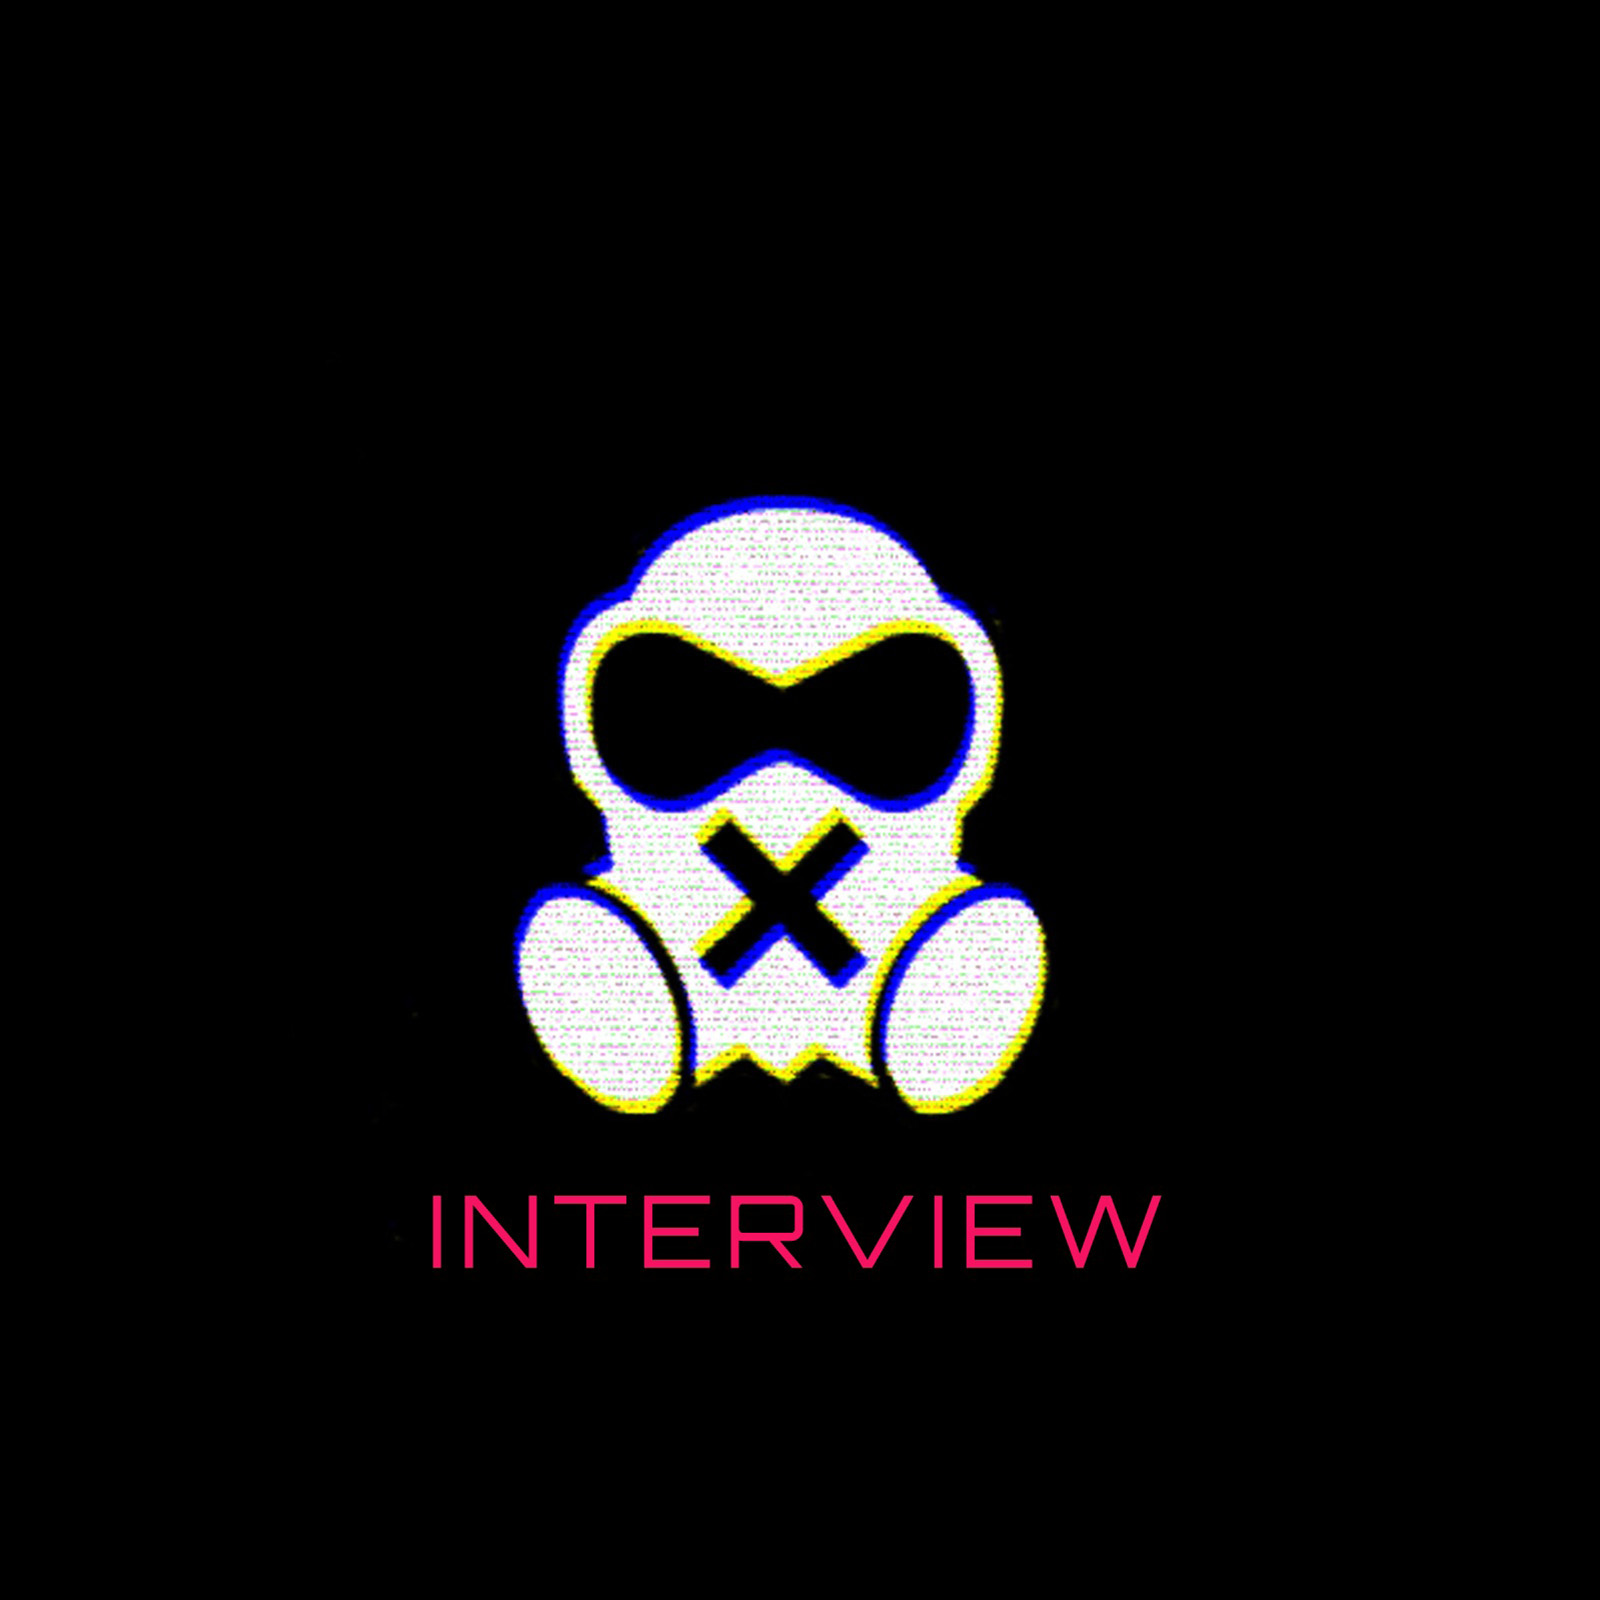 Interview by E.L